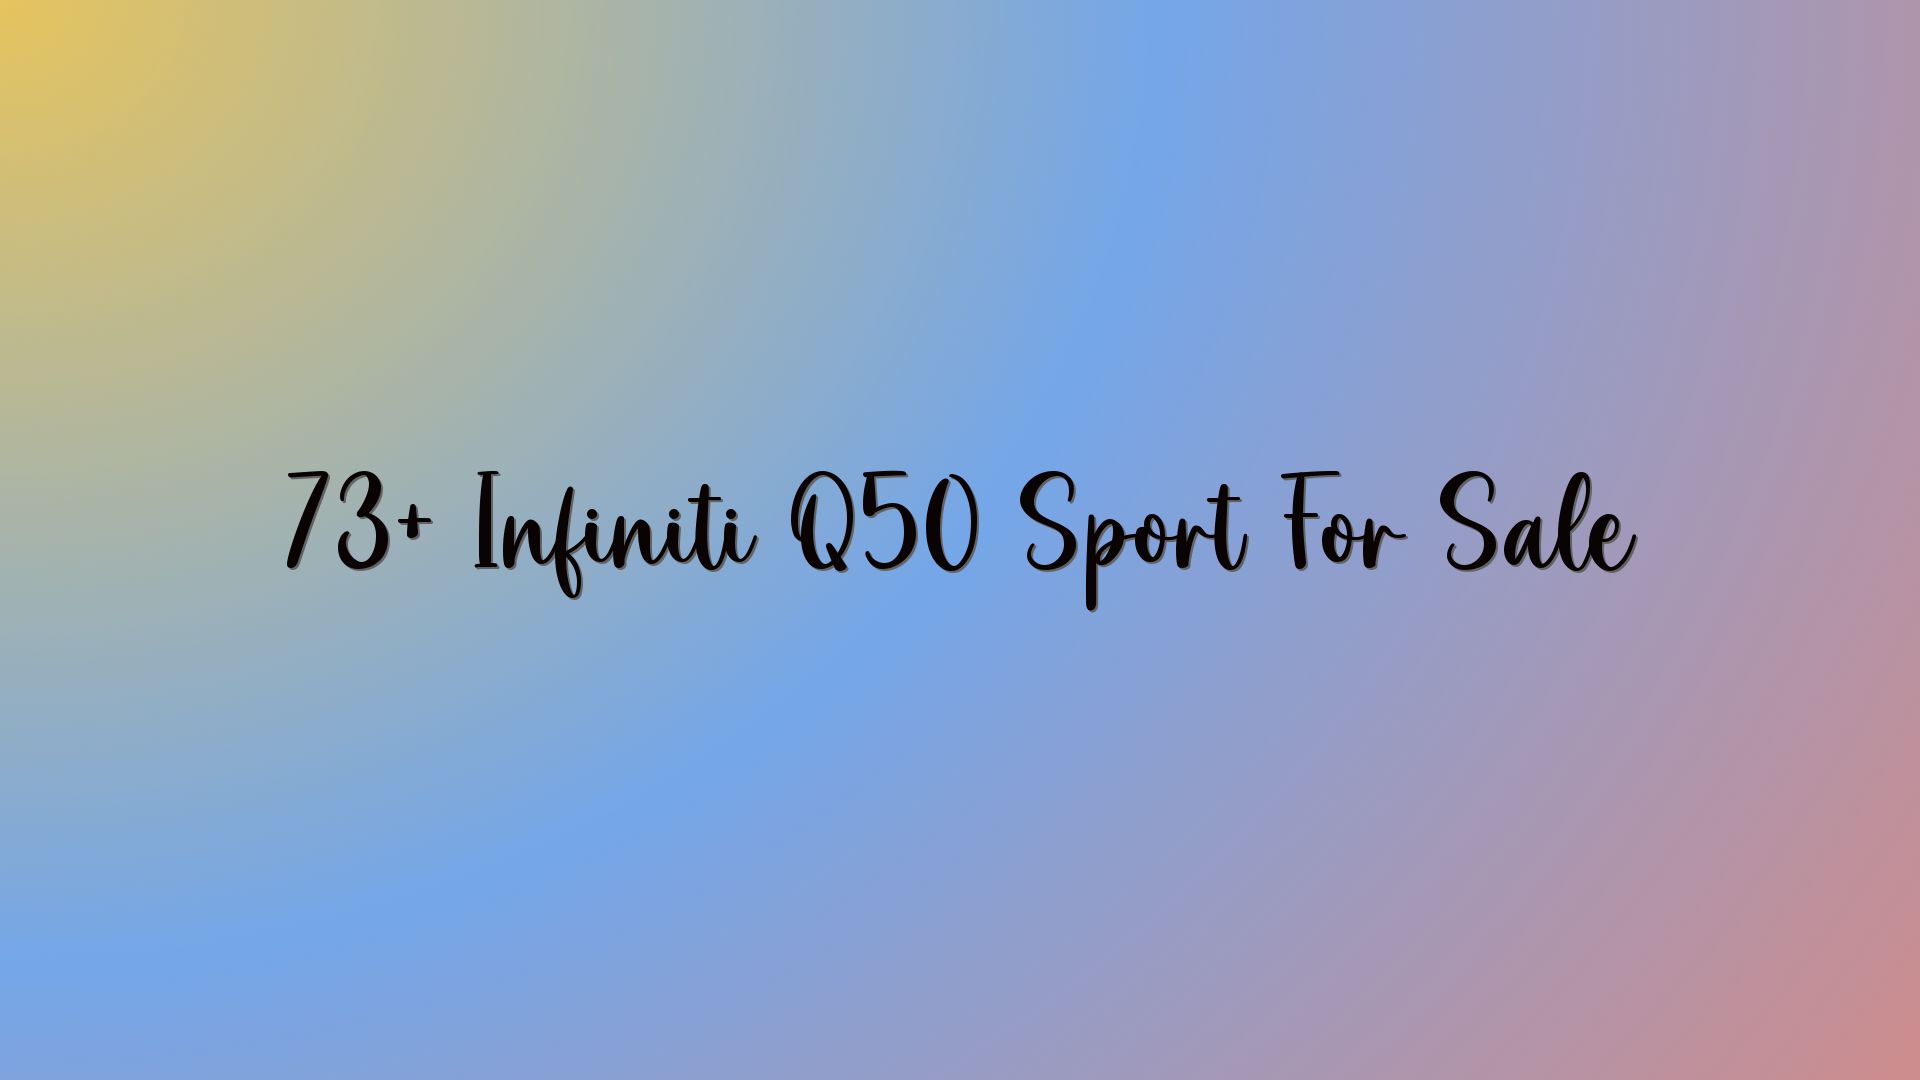 73+ Infiniti Q50 Sport For Sale